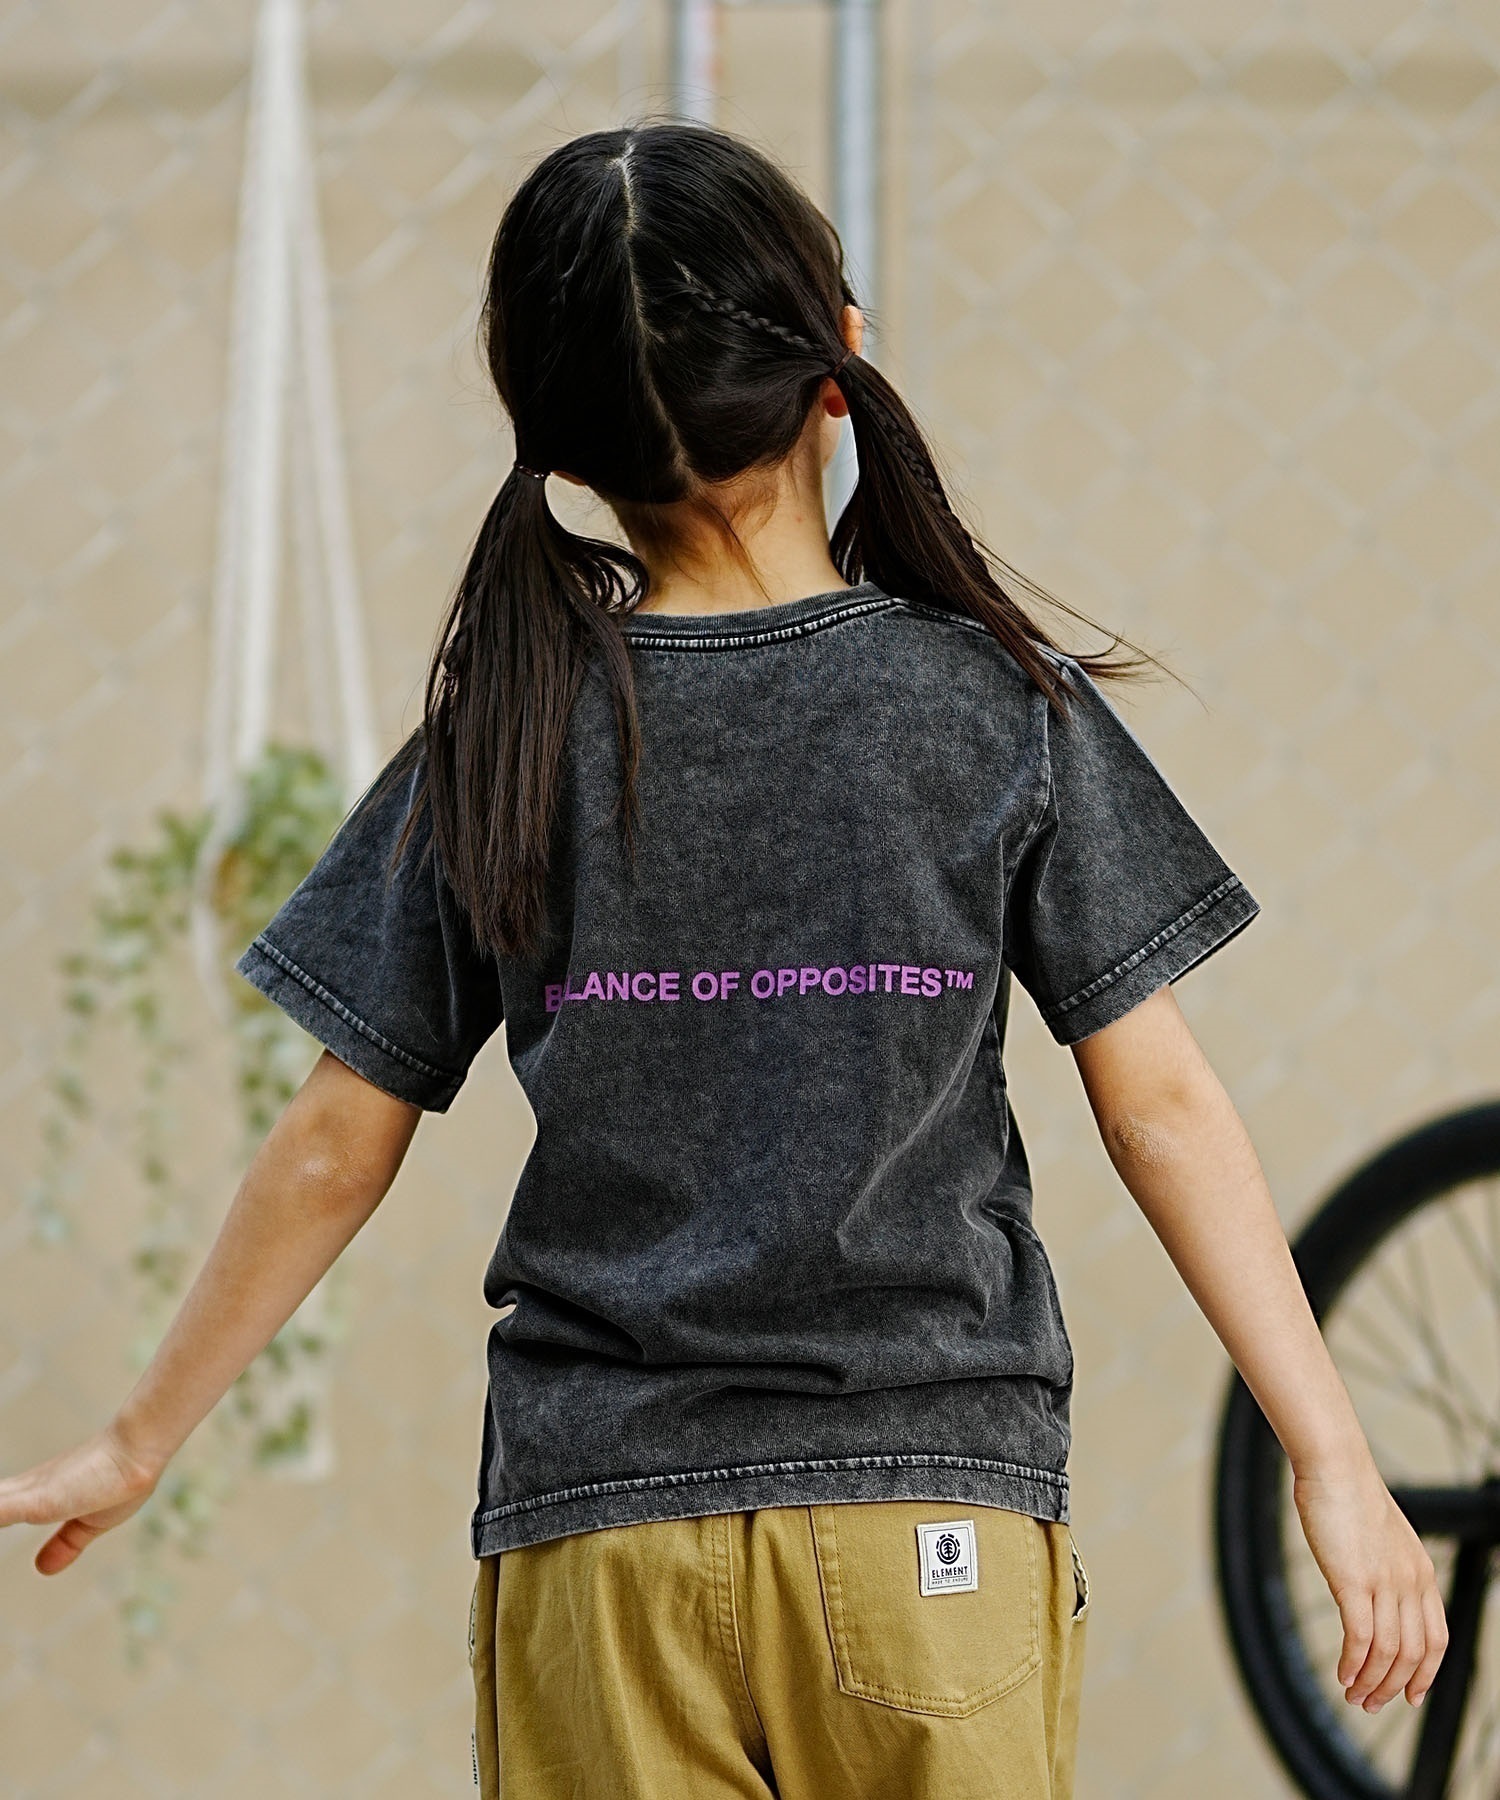 RVCA ルーカ キッズ 半袖Tシャツ 定番ロゴデザイン 親子コーデ BE045-226(BLK-130cm)